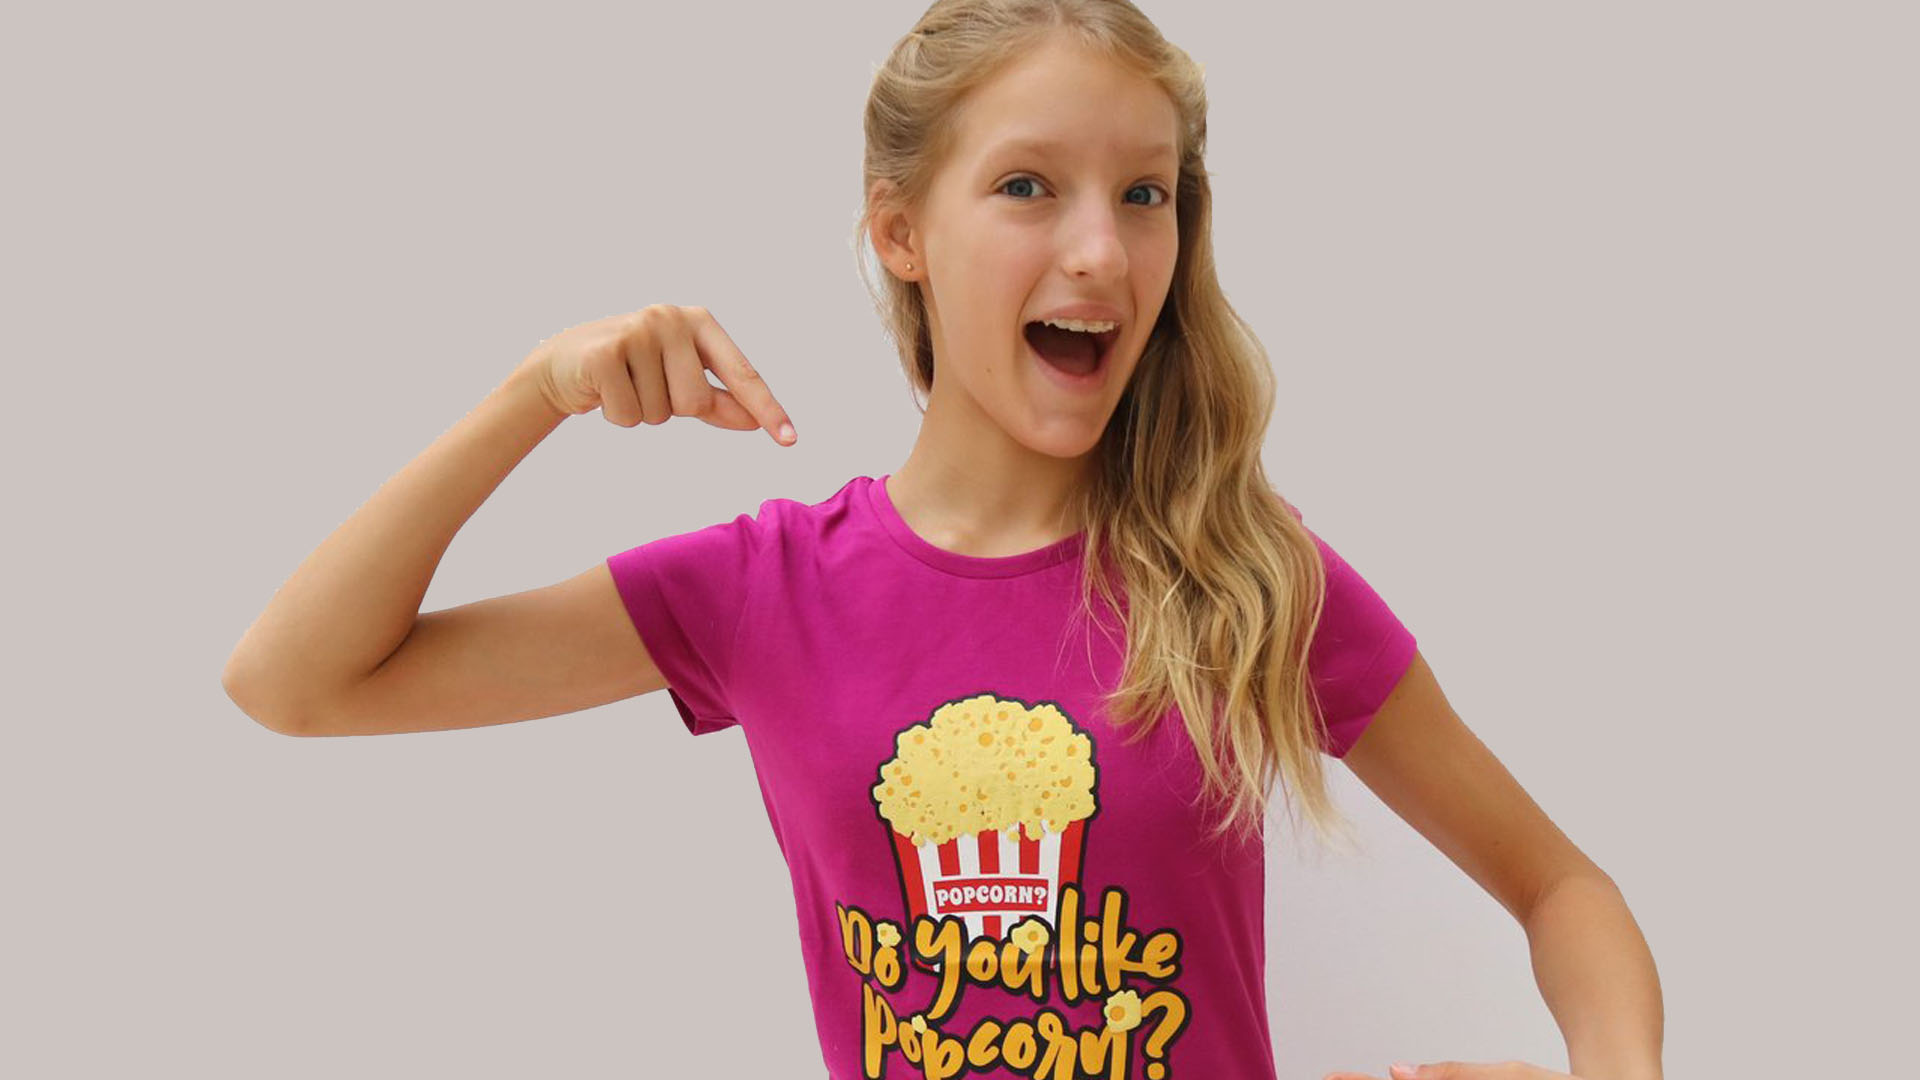 Karina in her popcorn t-shirt